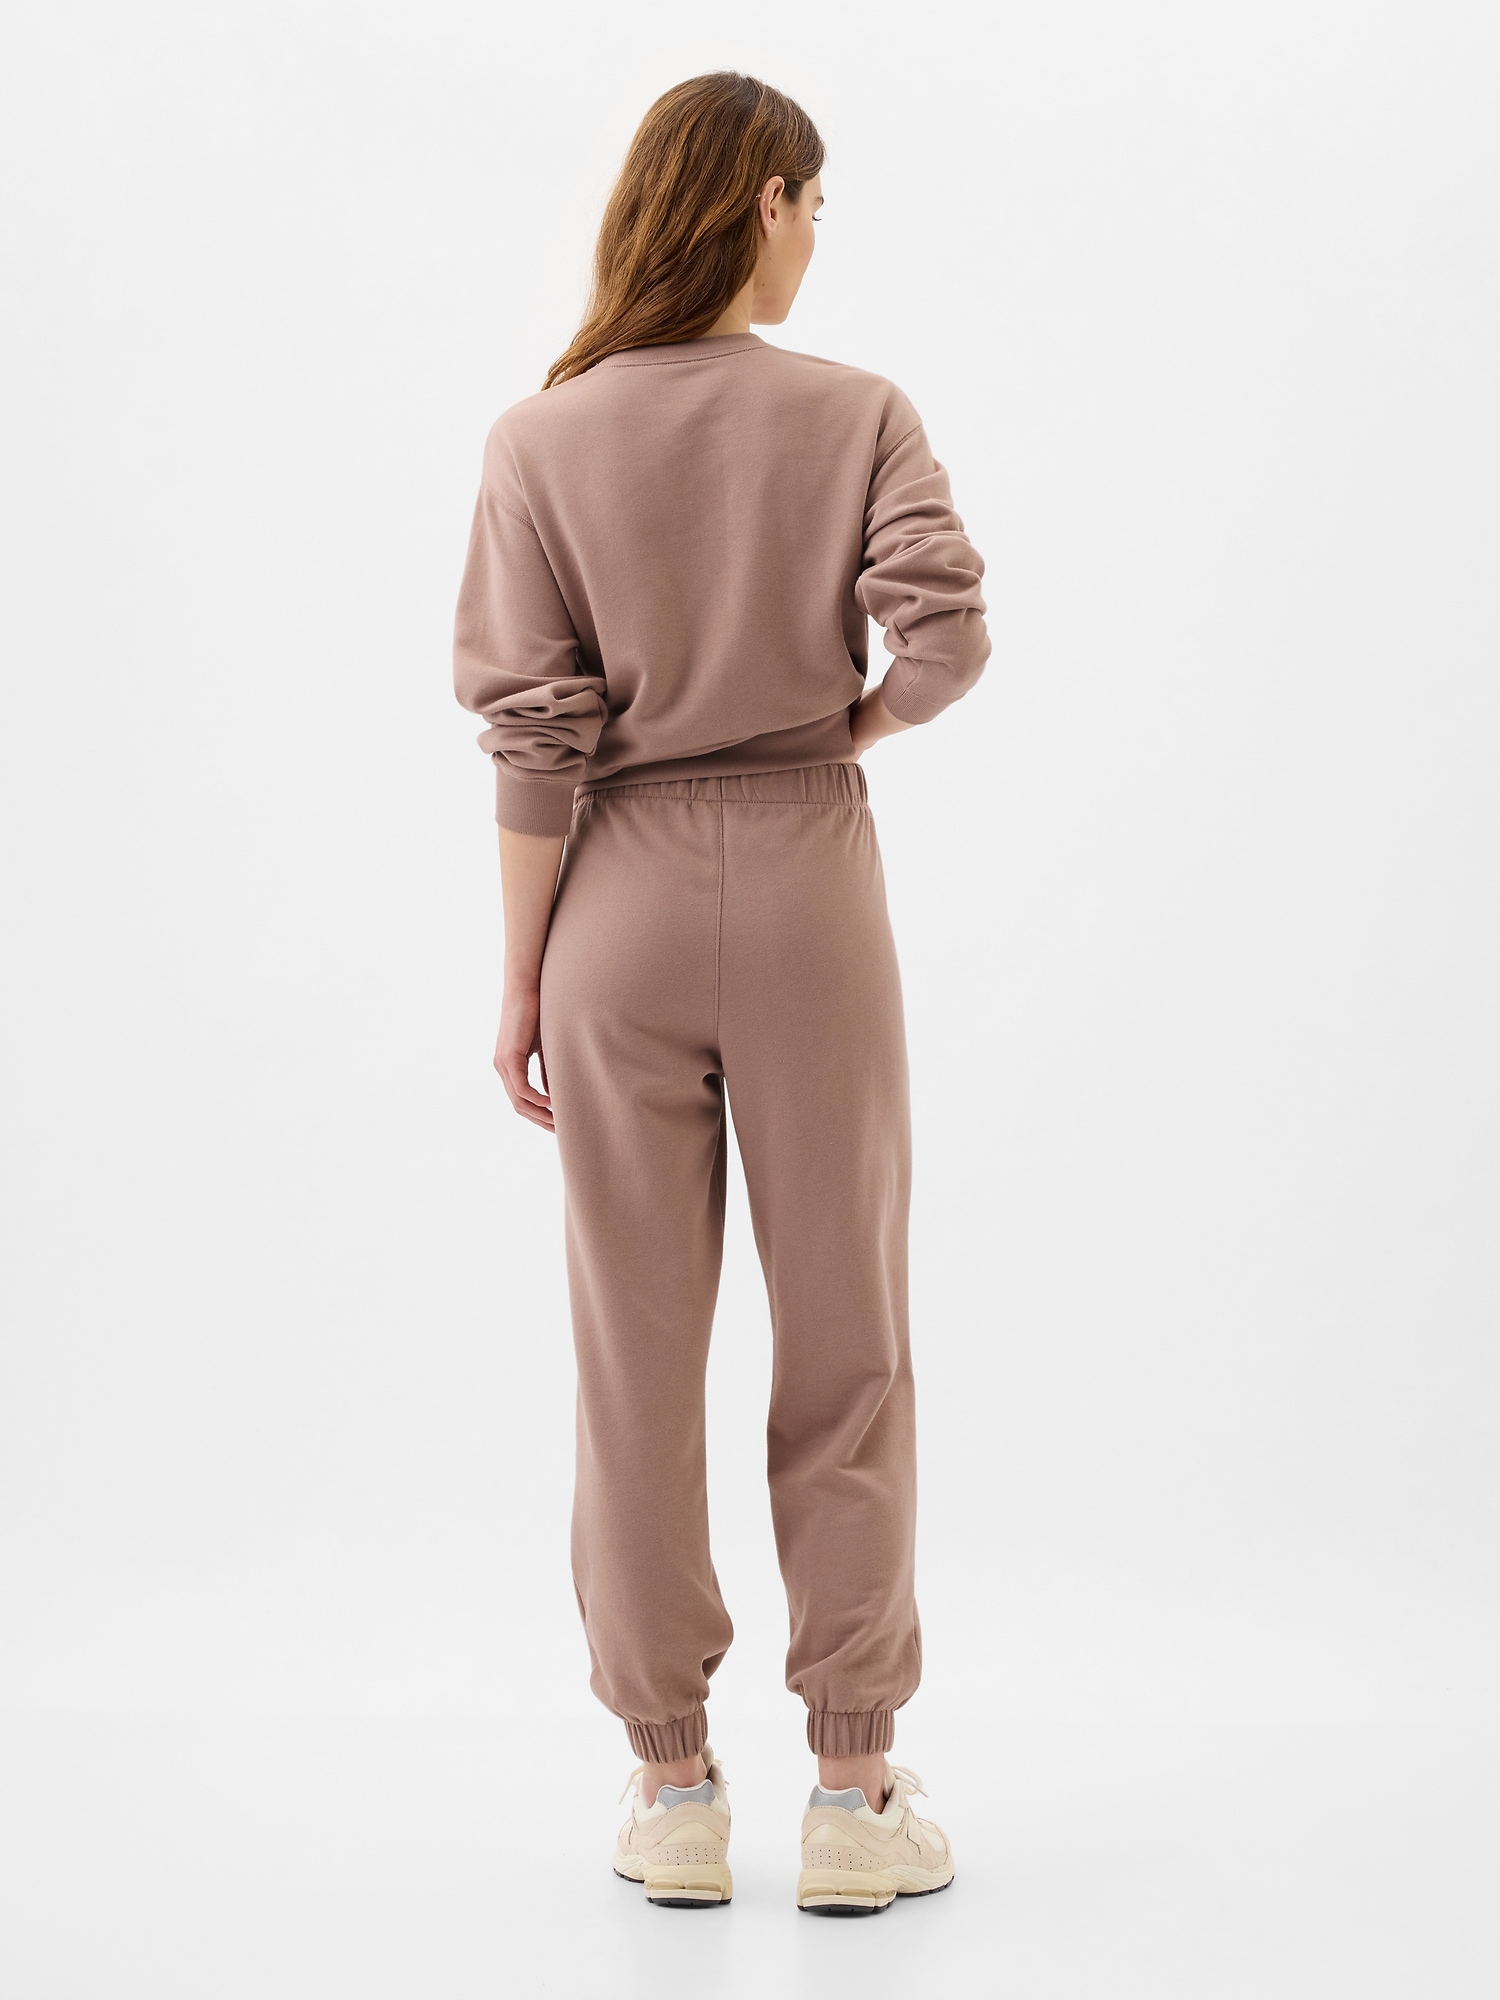 Women's Loose-Fit Marled Fleece Jogger Sweatpants With Zipper Pockets